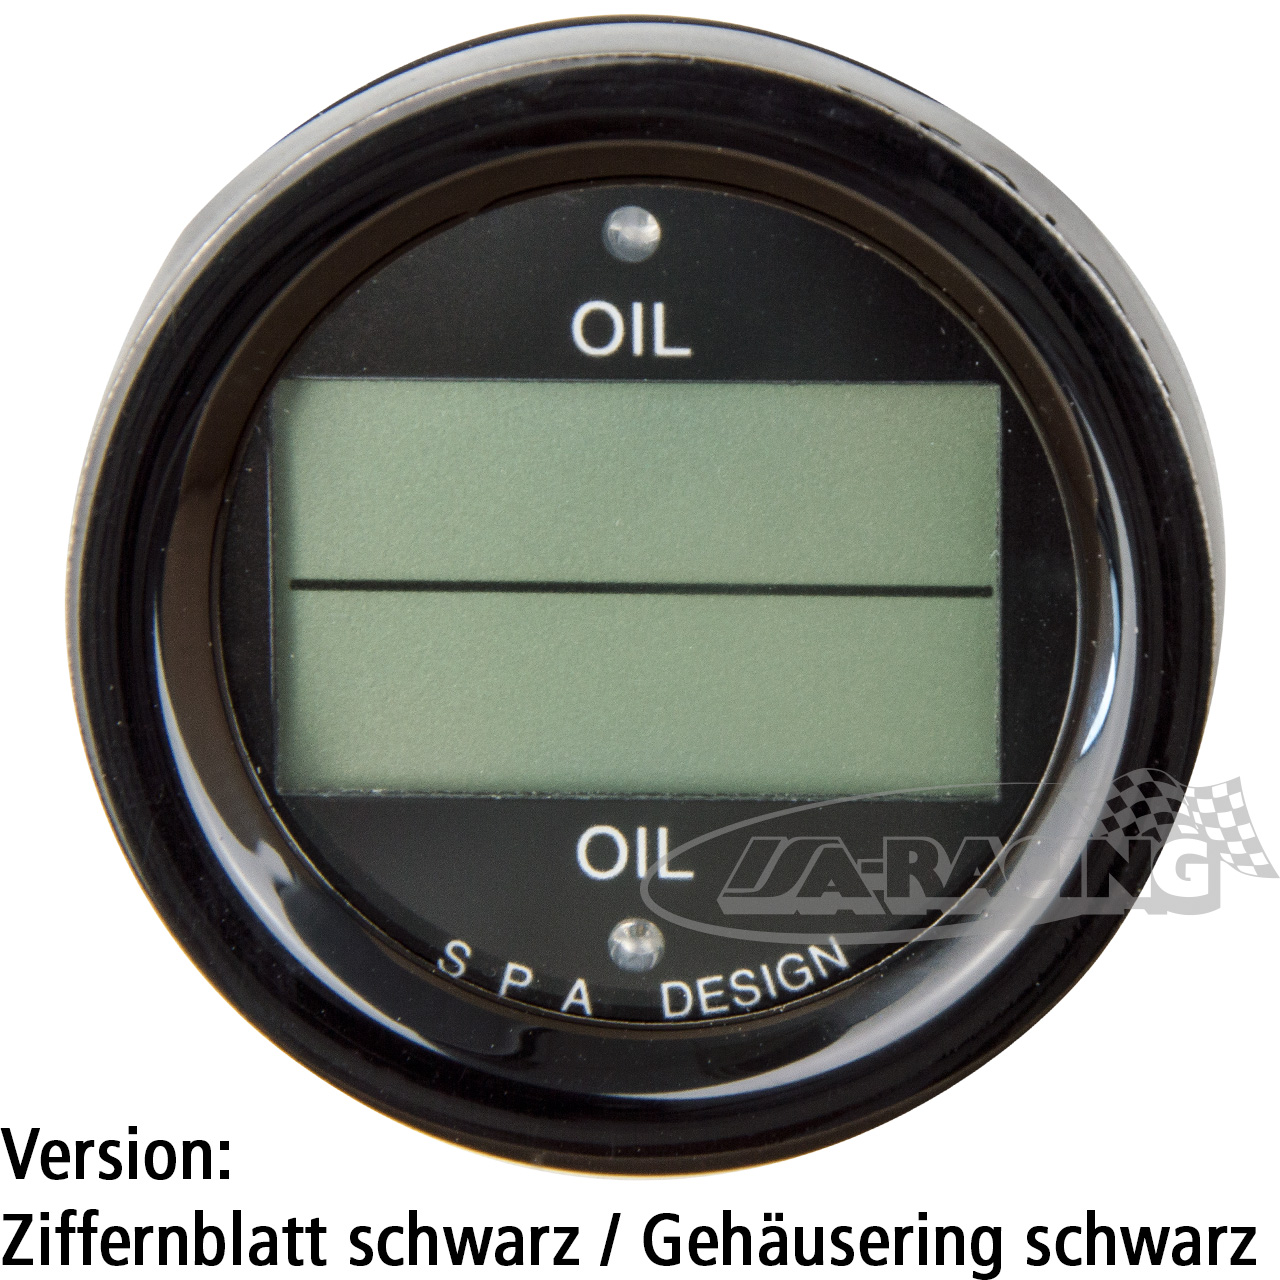 Digitale Öltemperaturanzeige 52mm LCD Display 150°C 2 Farbig Weiss Grün